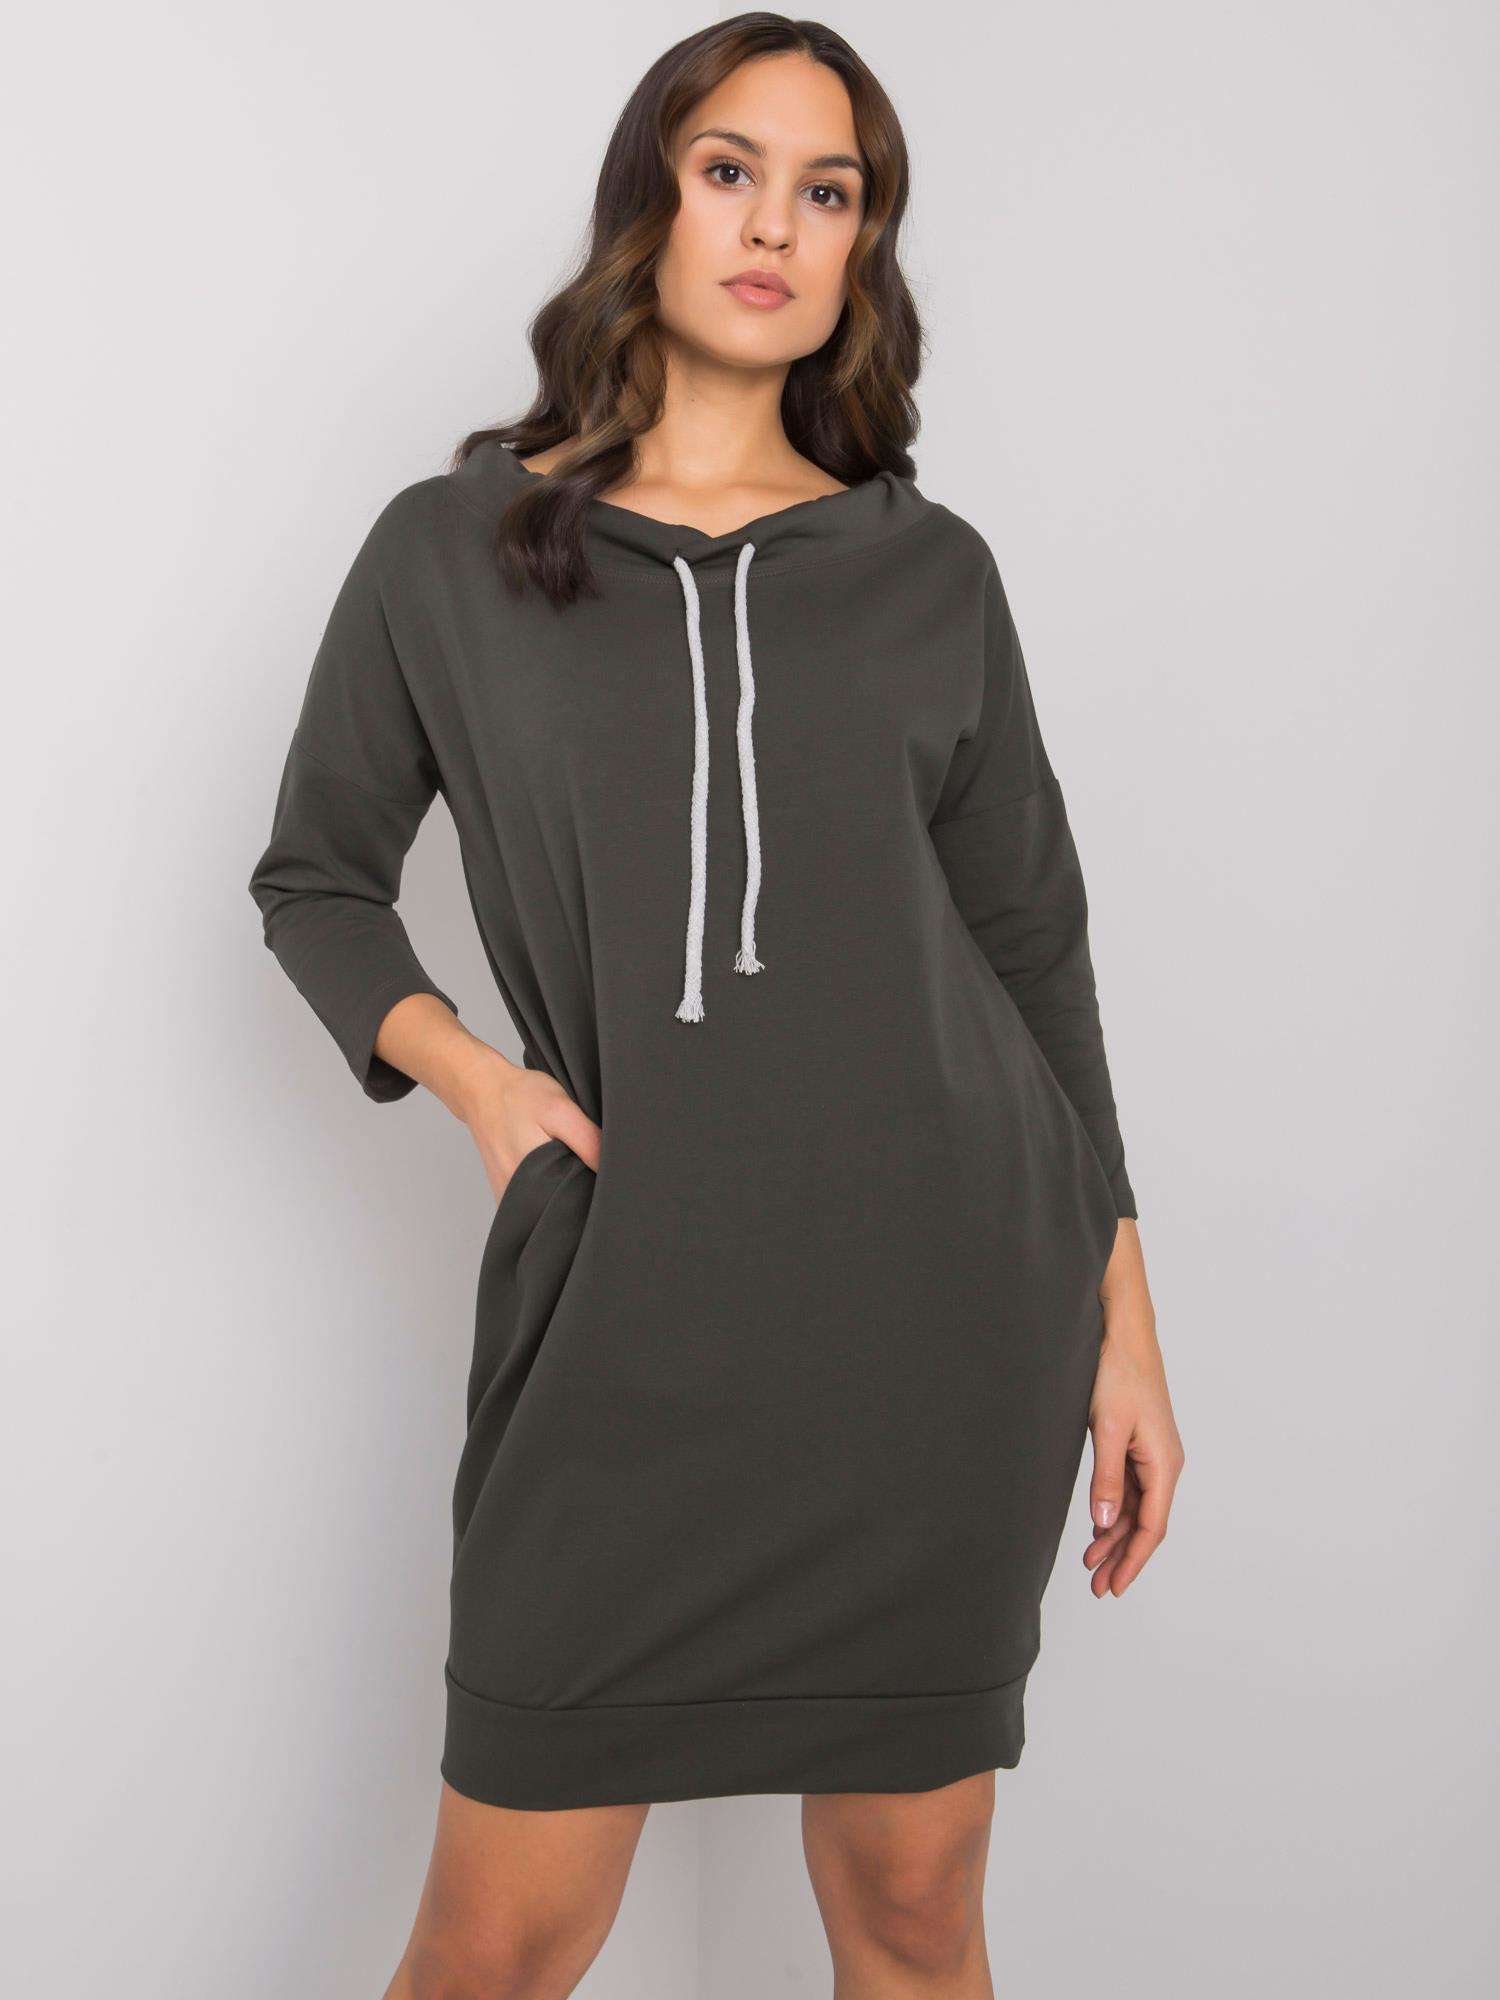 Khaki dámské mikinové šaty s kapsami RV-SK-4597-1.97-khaki Velikost: S/M